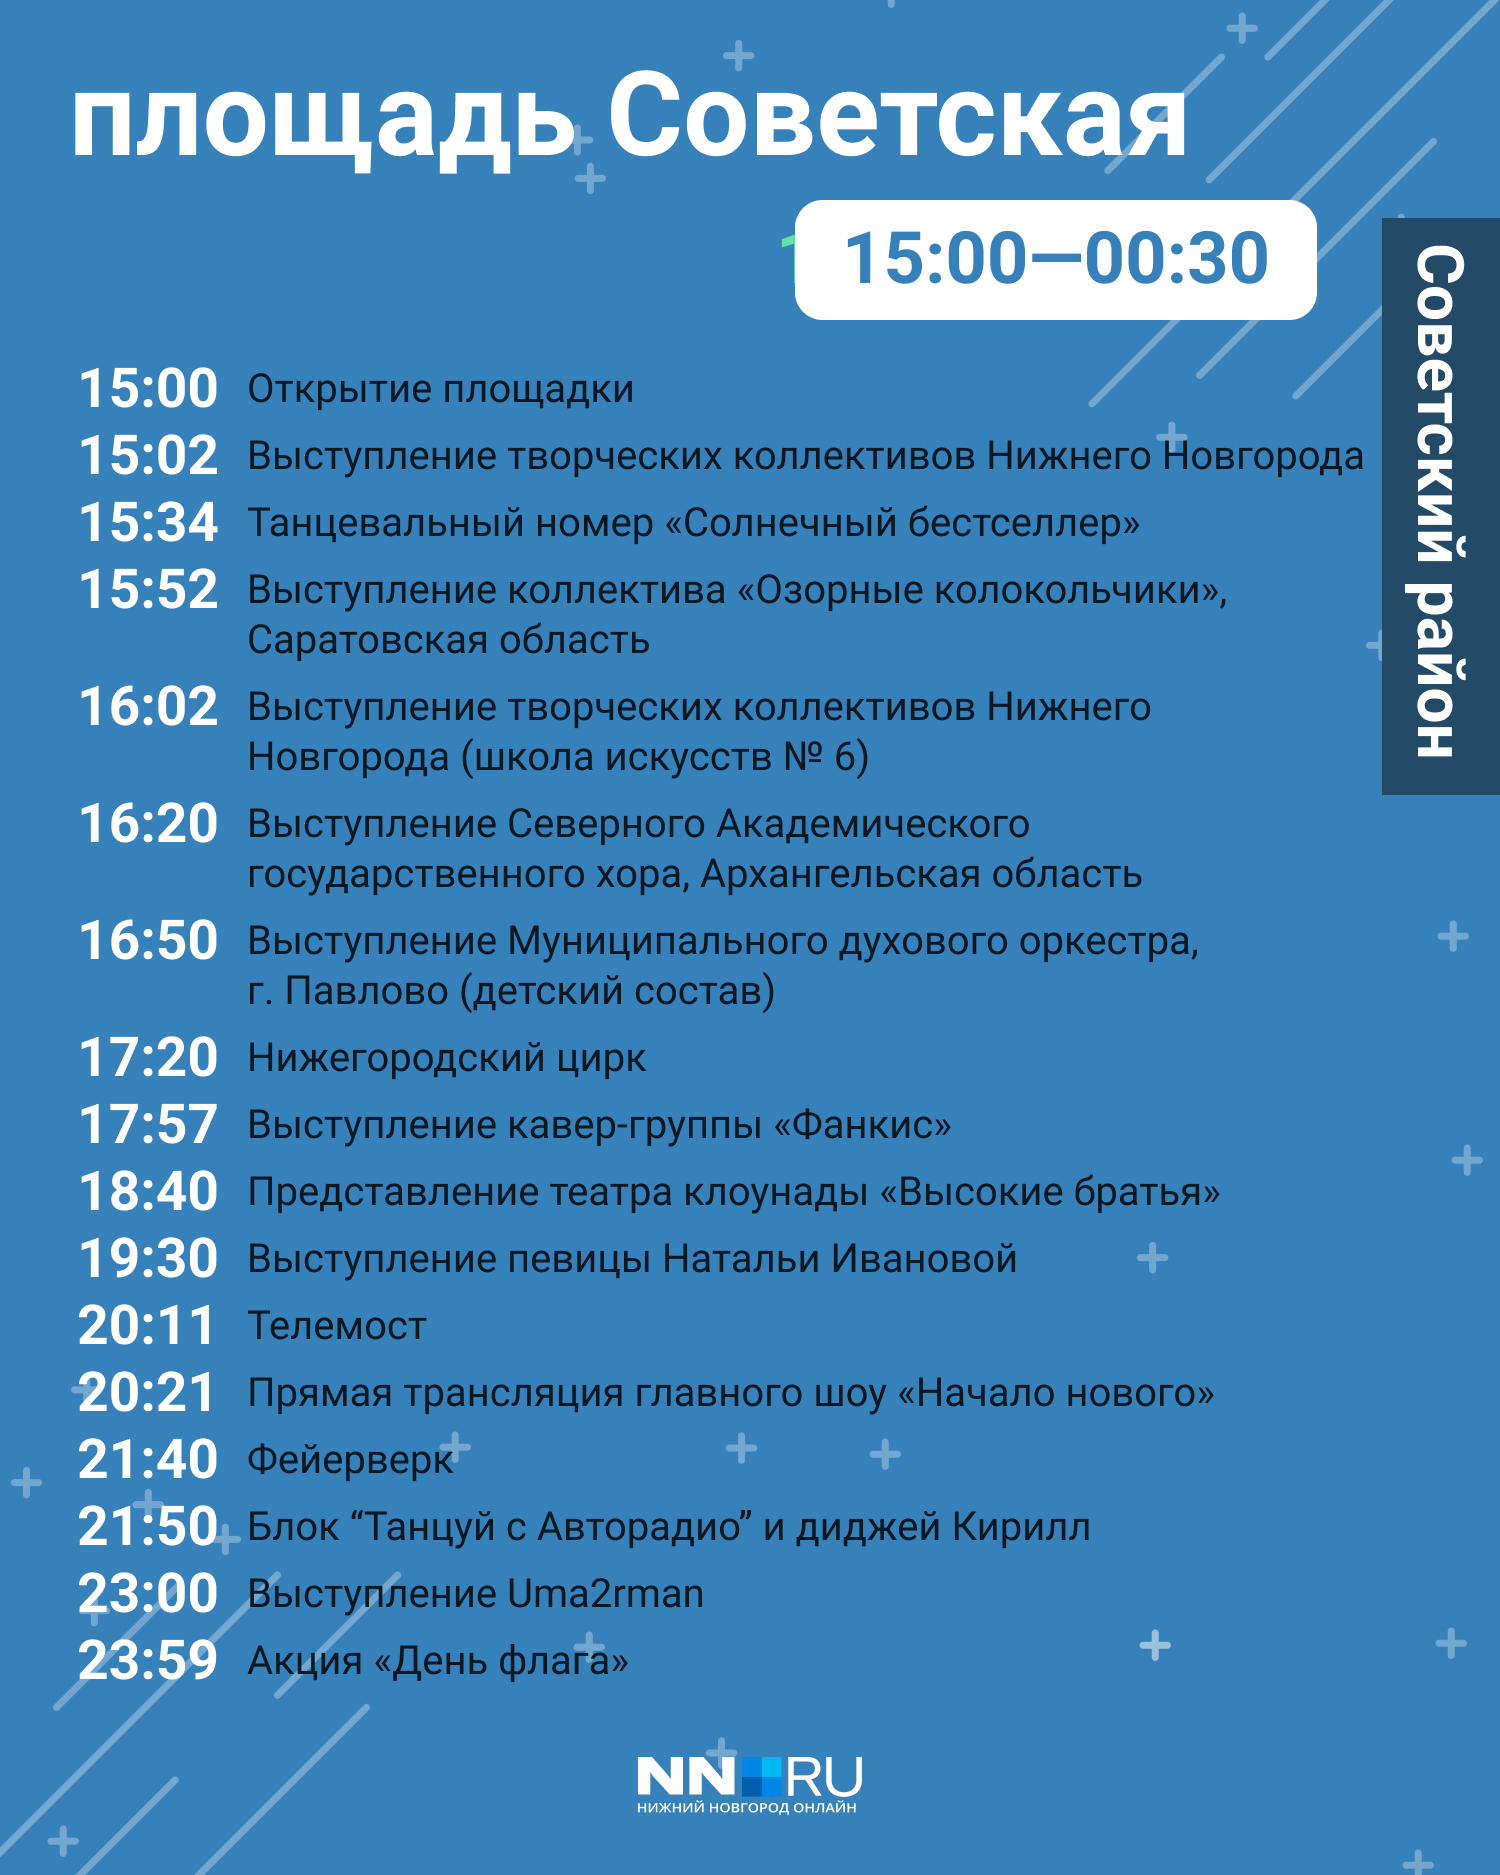 Программа мероприятий в Советском районе